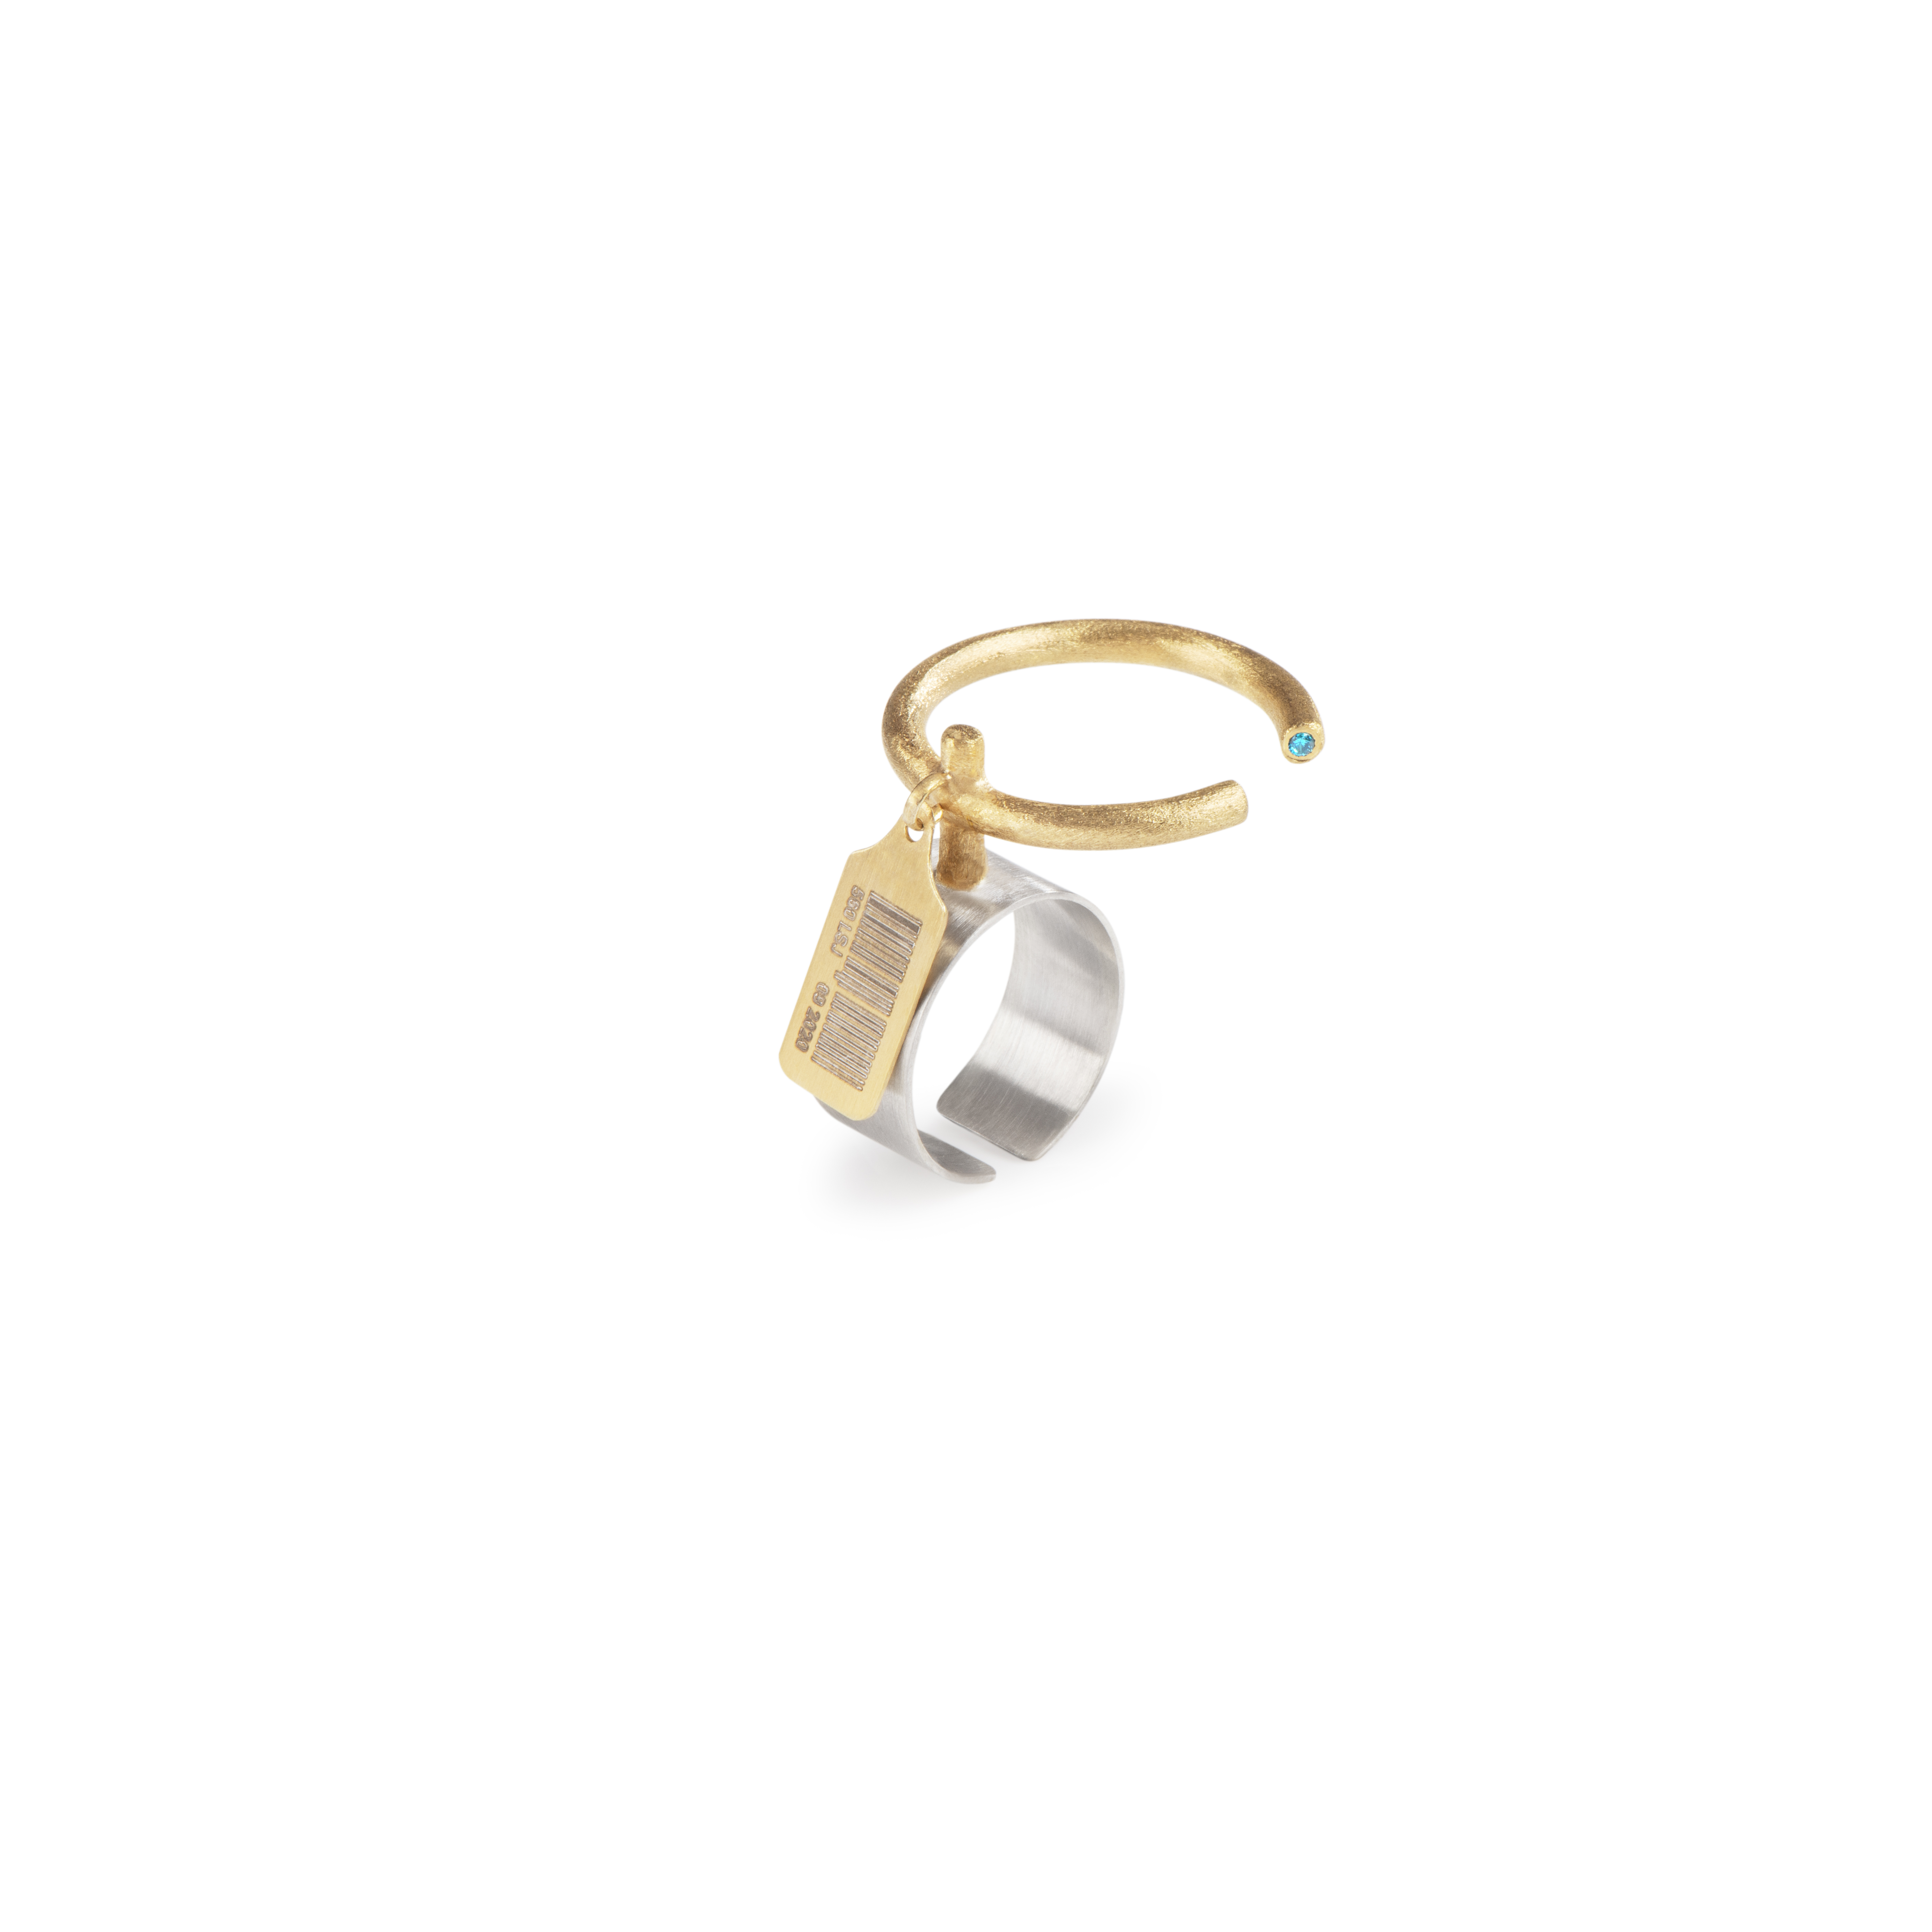 Circular Clothes Hanger Ring - Gold  - Image 1